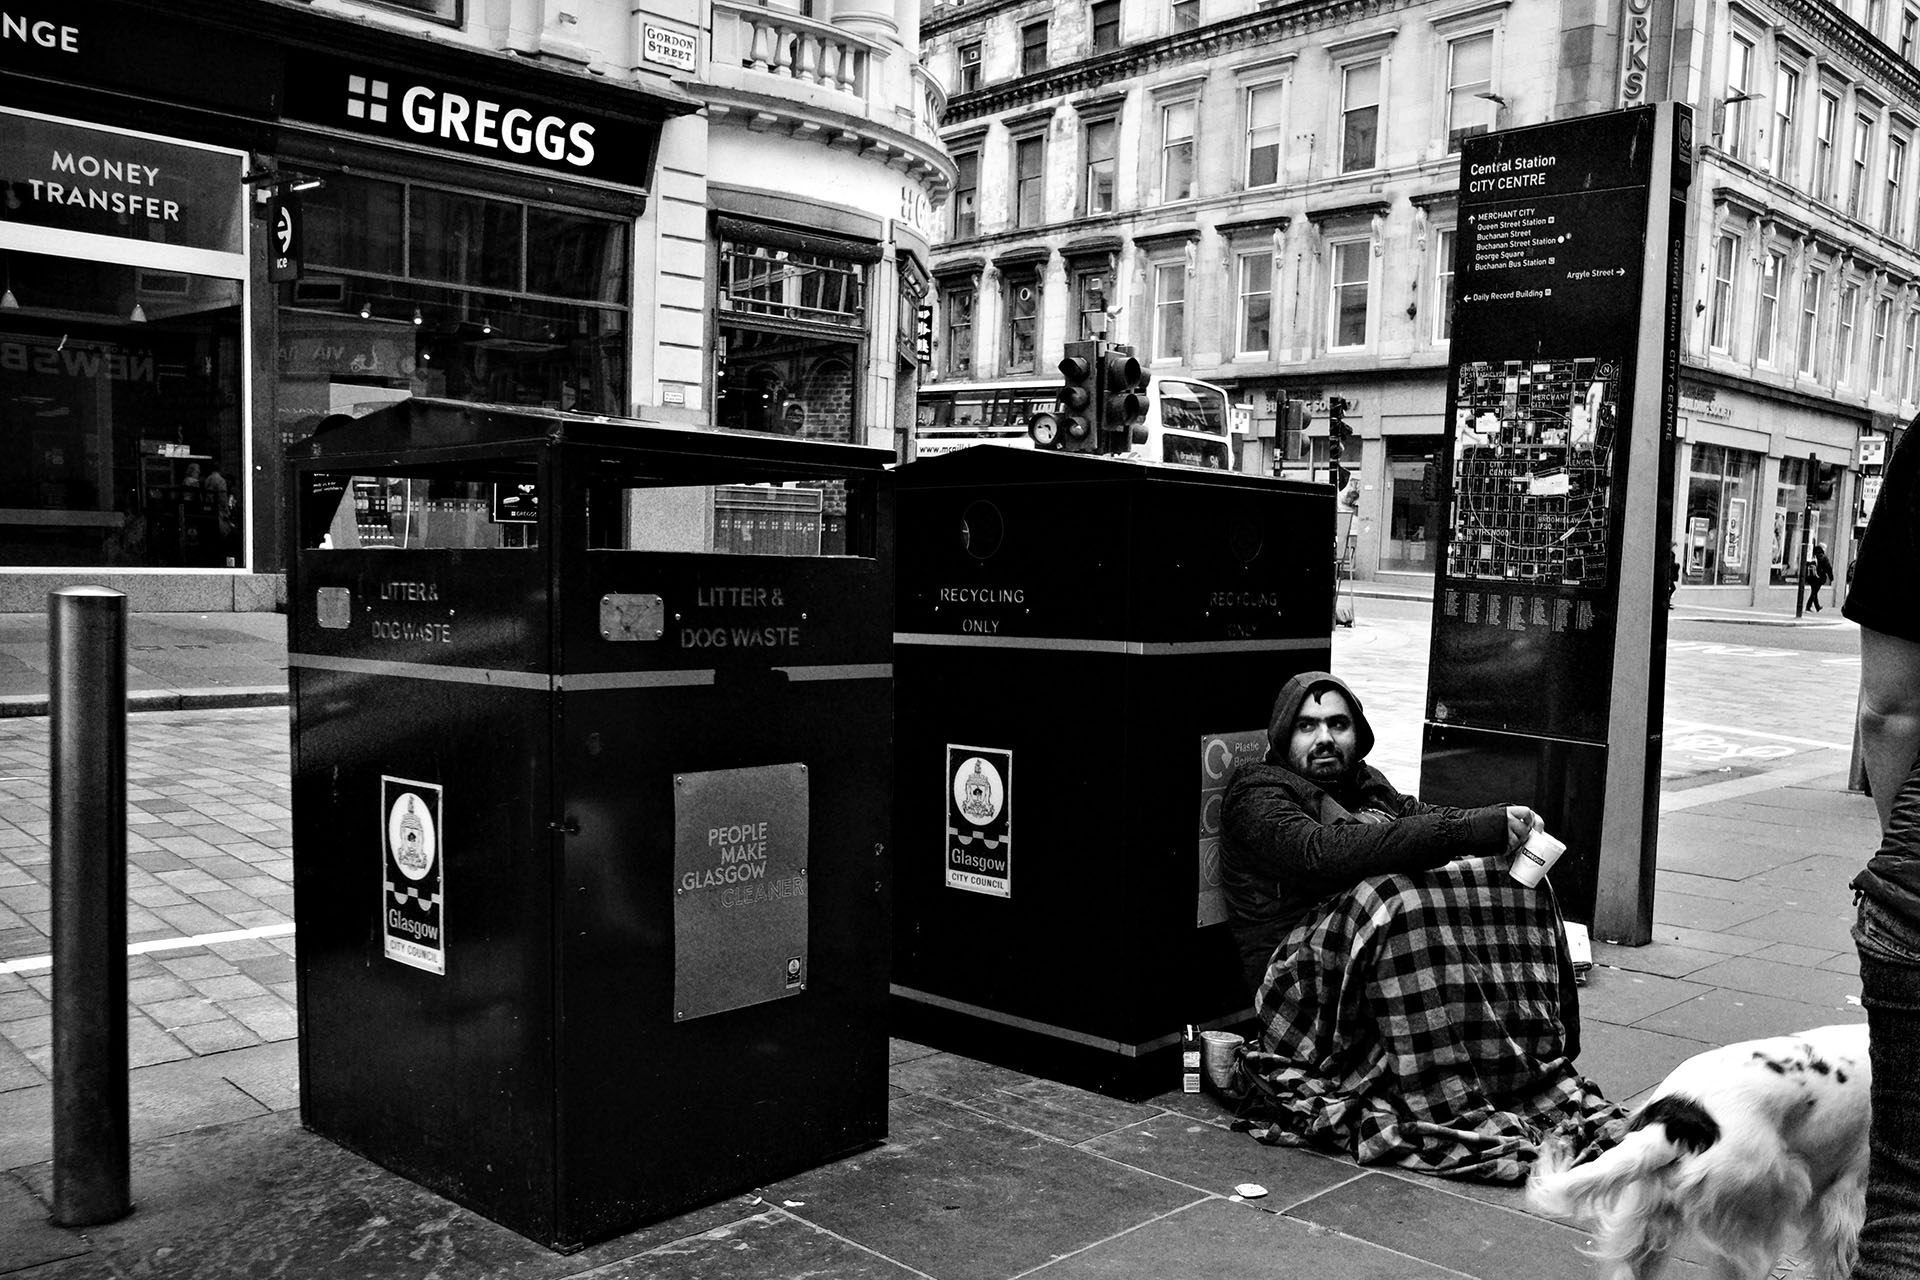 Glasgow street photographer